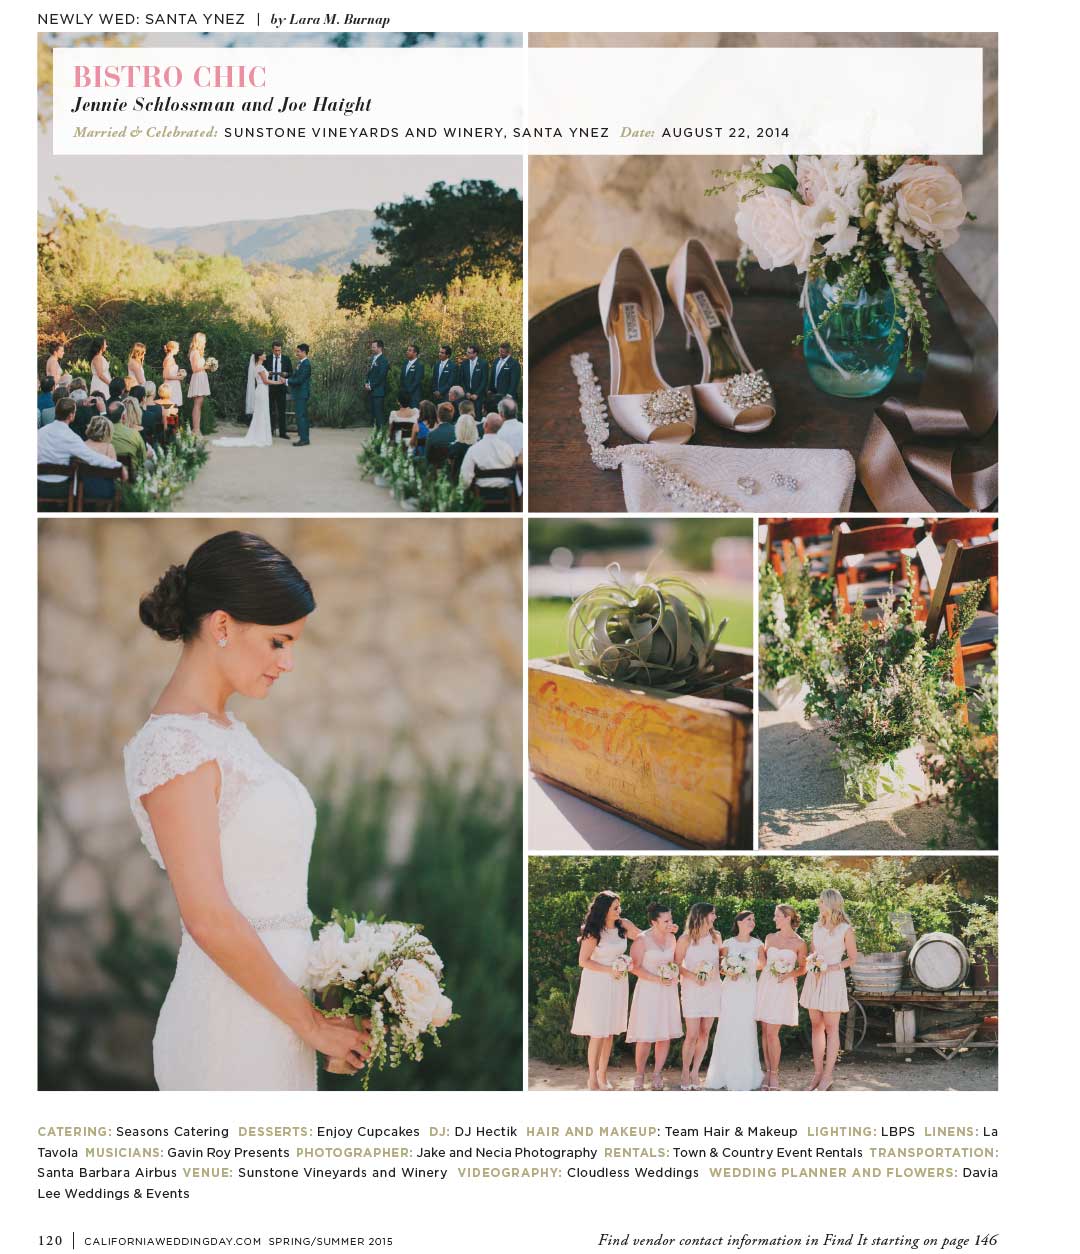 press-page-davia-lee-california-wedding-day-ss2015-p120